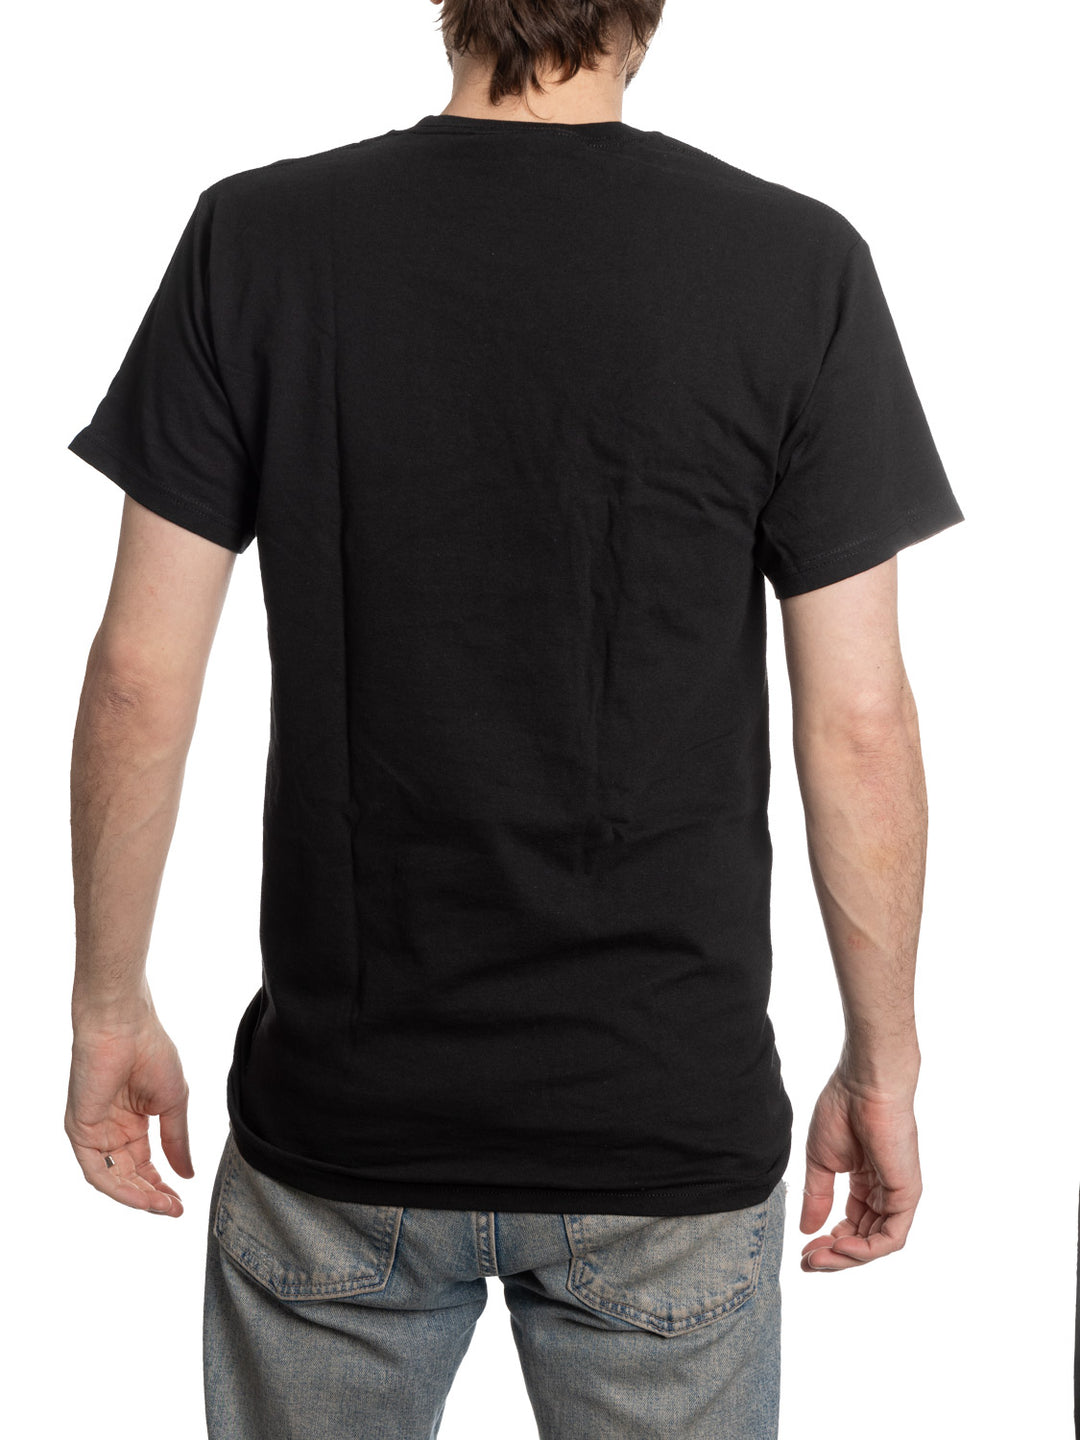 Miller Genuine Draft Classic Logo Black T-Shirt